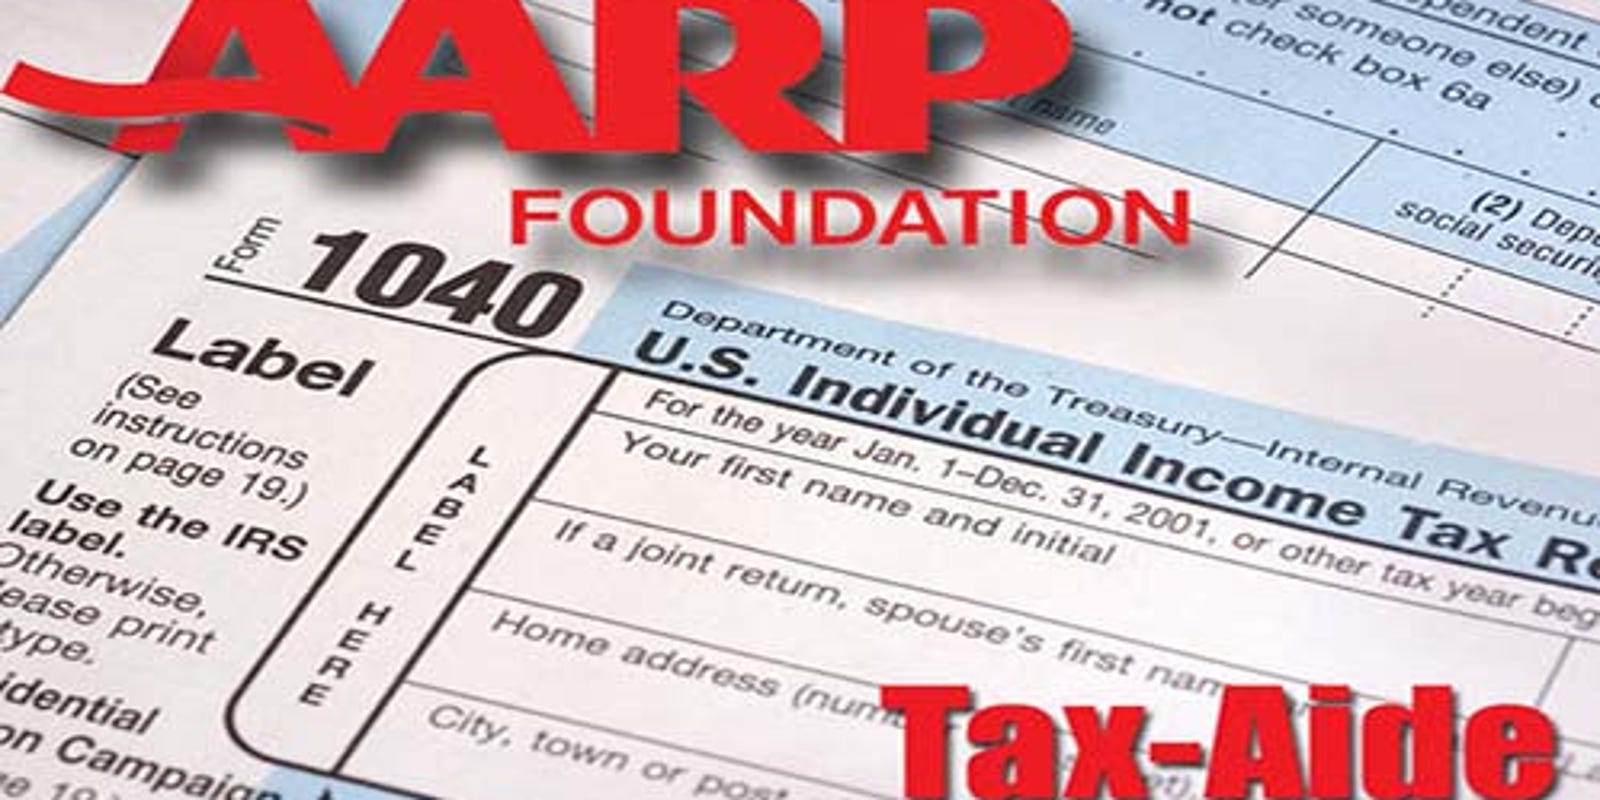 AARP volunteers provide tax help in Rockport and Portland